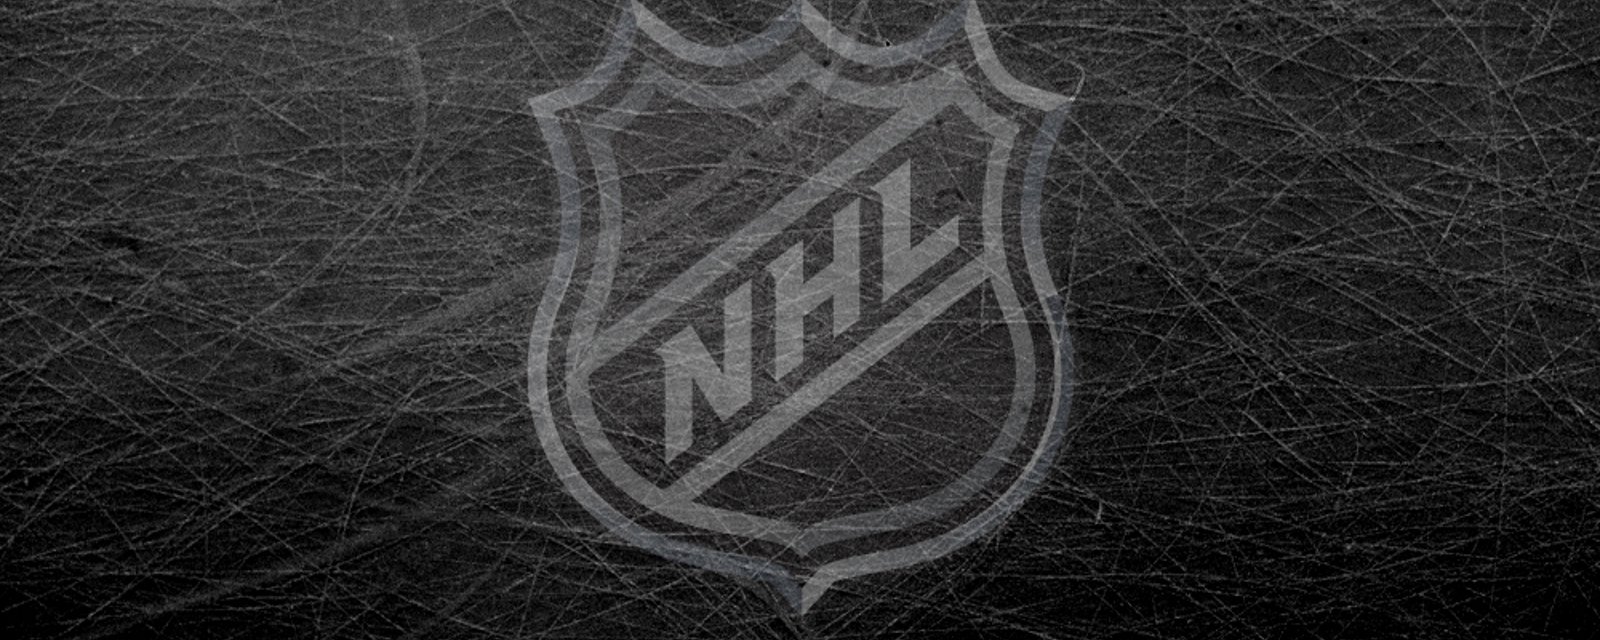 NHL suspends the 2019-20 season due to coronavirus pandemic